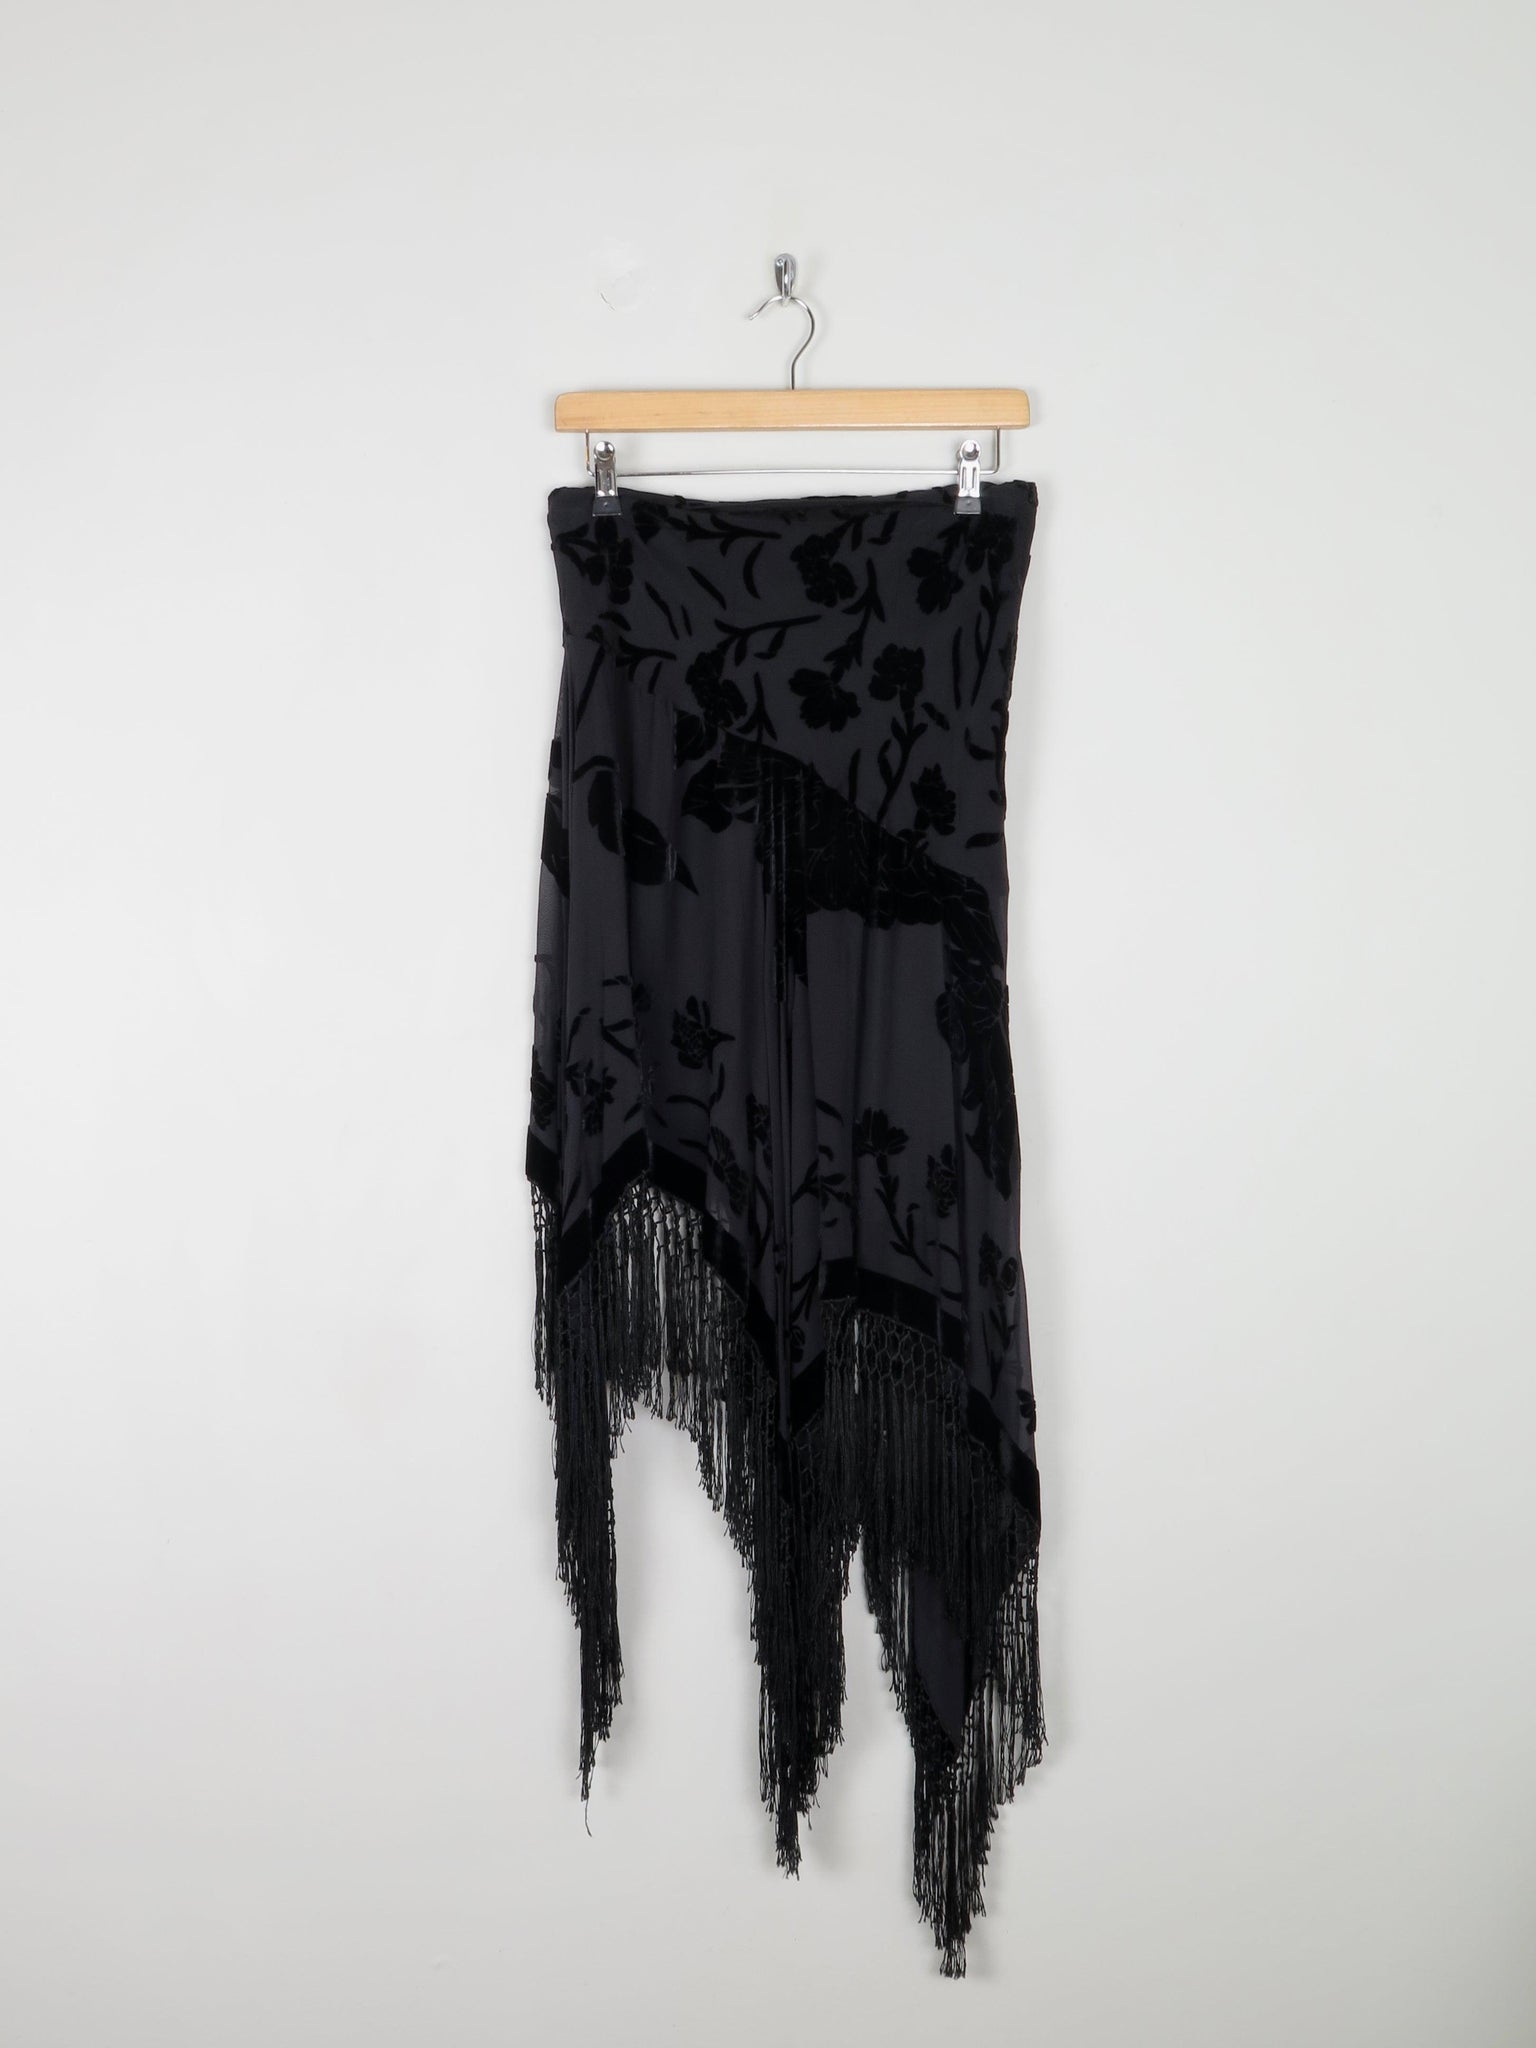 Black Devore Pearse Fionda Skirt S/M - The Harlequin